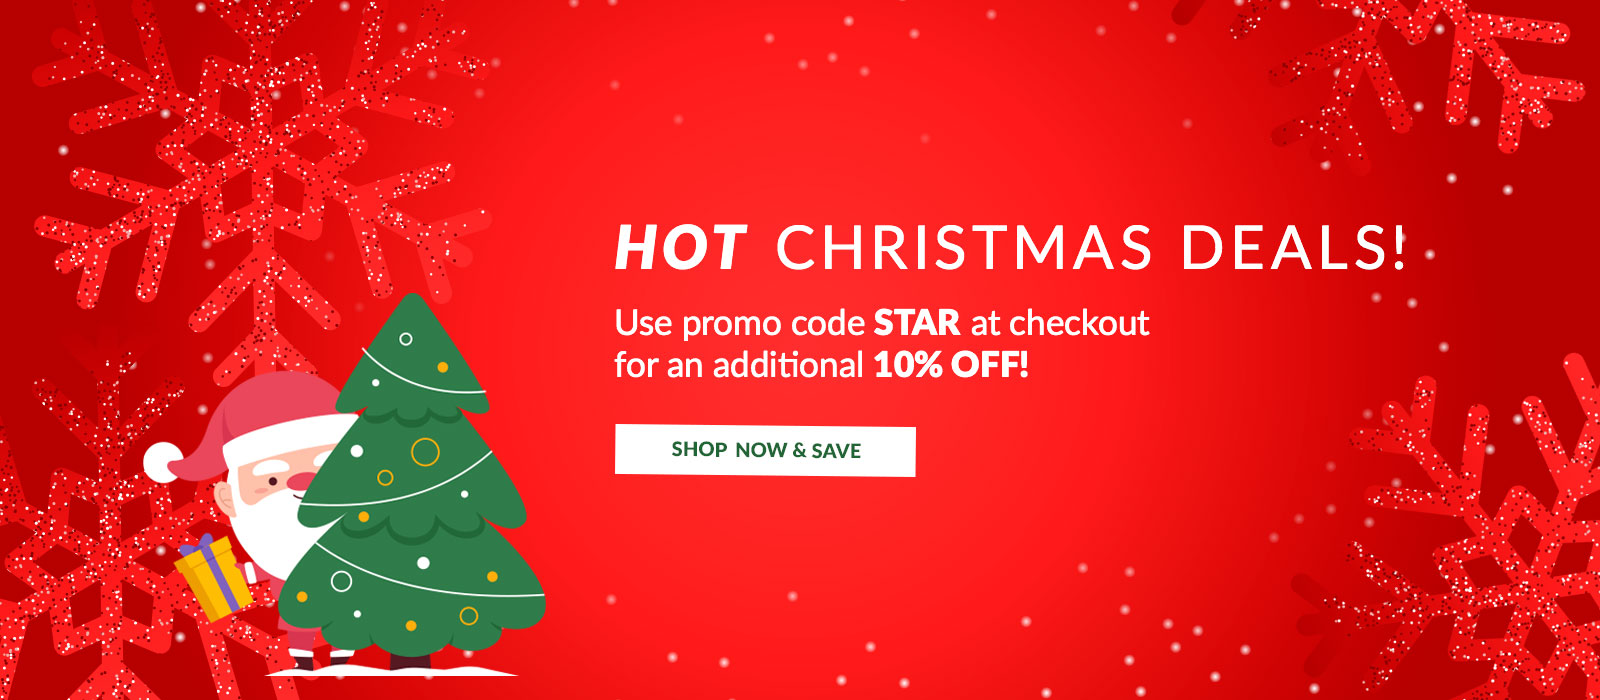 Christmas Deals - Promo code STAR for 10% off!